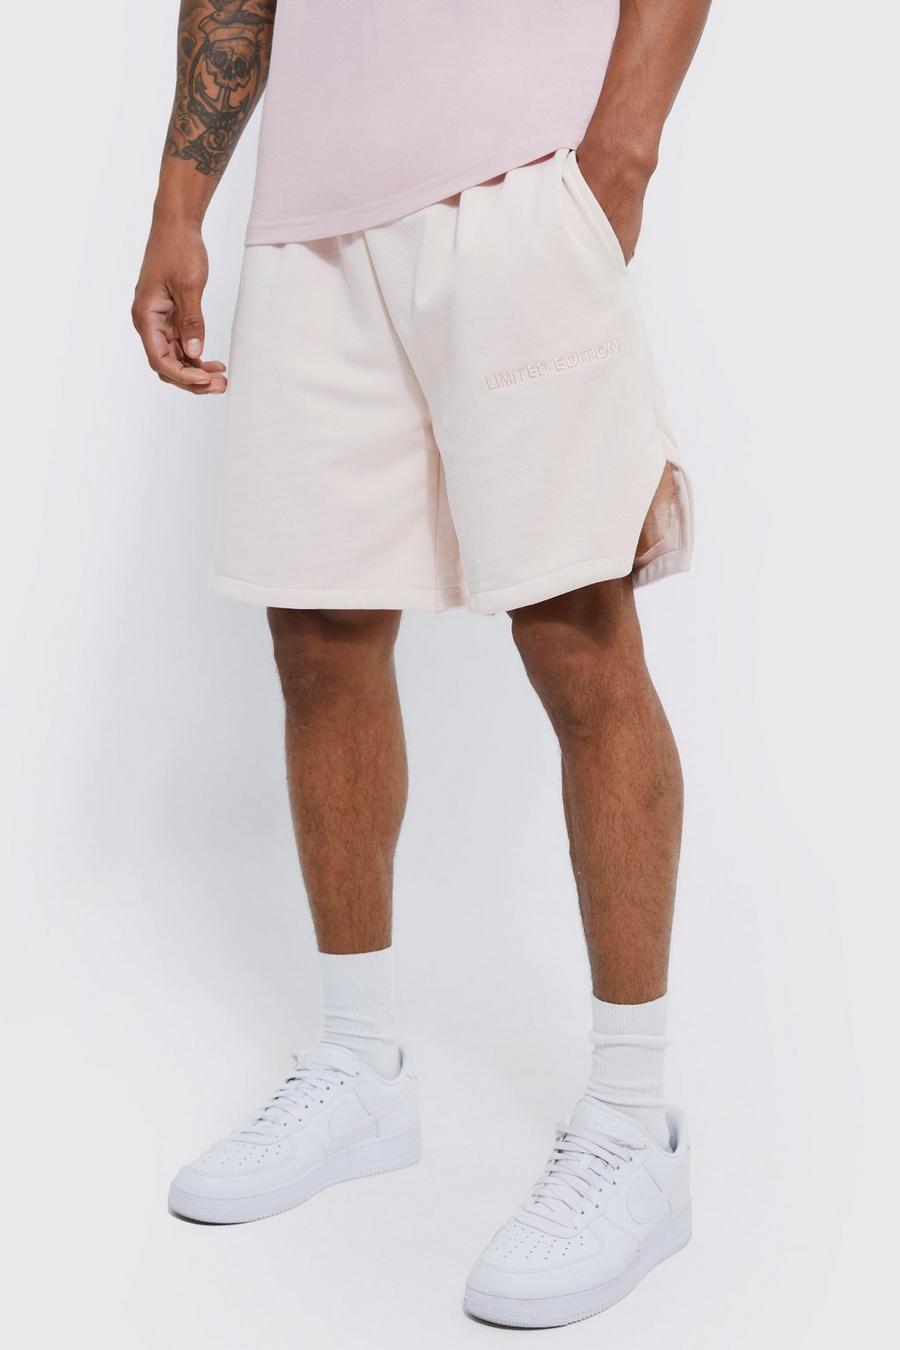 Lockere Locker Volley-Shorts, Pale pink